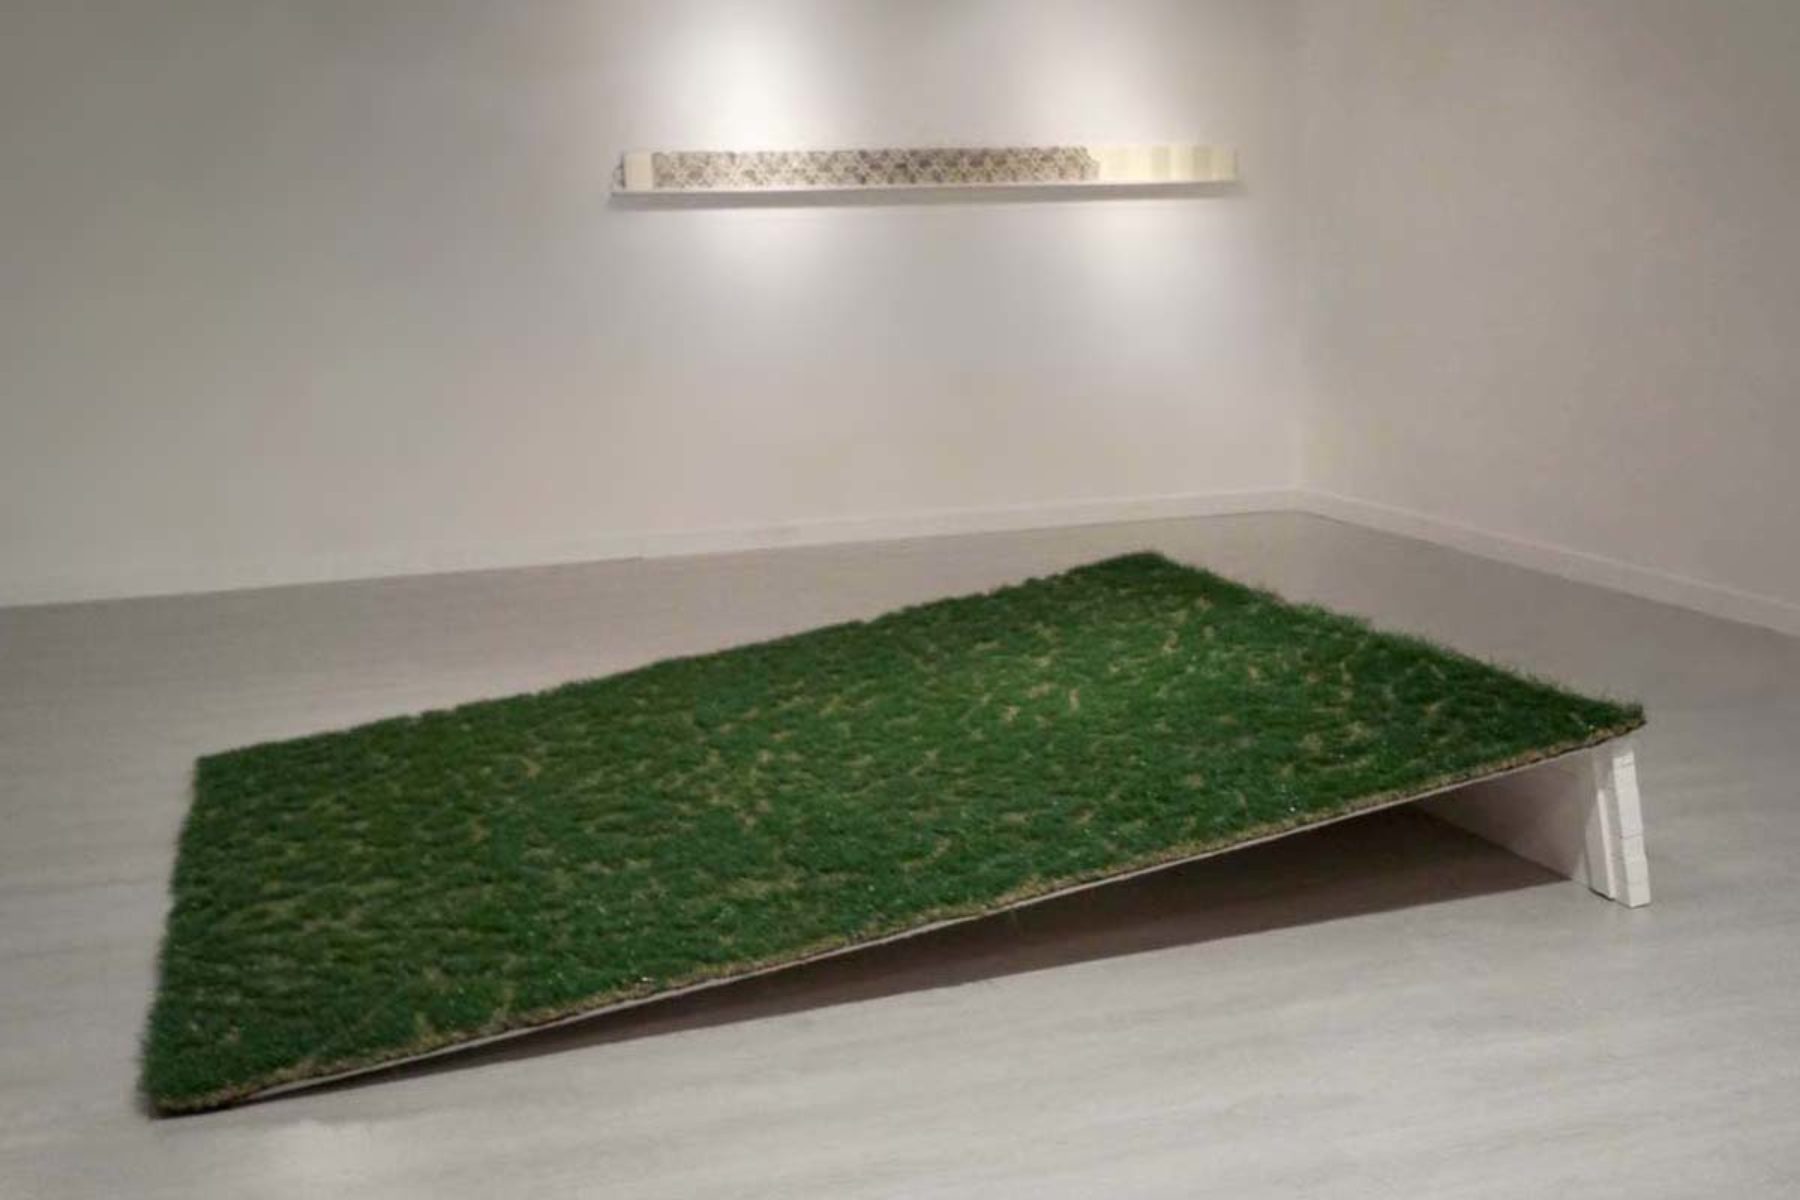 Laura Pozzar, Keep off the grass (carpet), 2013, cutted artificial grass, 230 x 200 cm